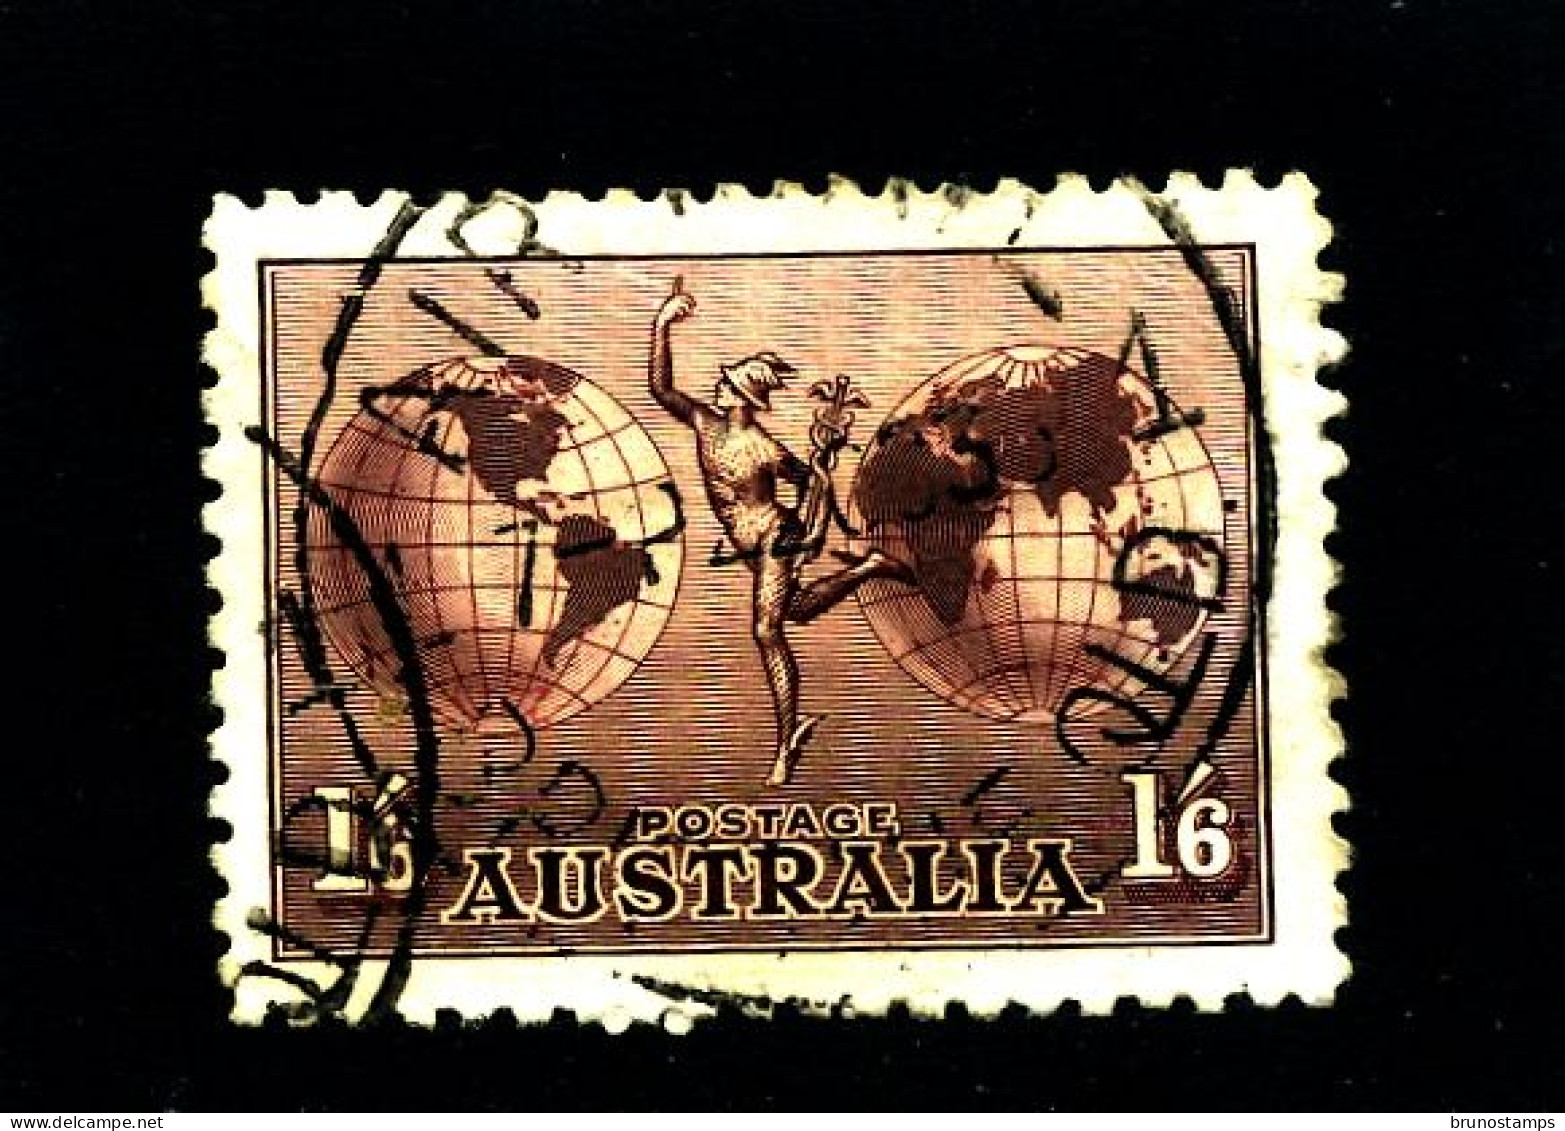 AUSTRALIA - 1934  1/6  HERMES  NO WMK  FINE USED  NH SG 153 - Used Stamps